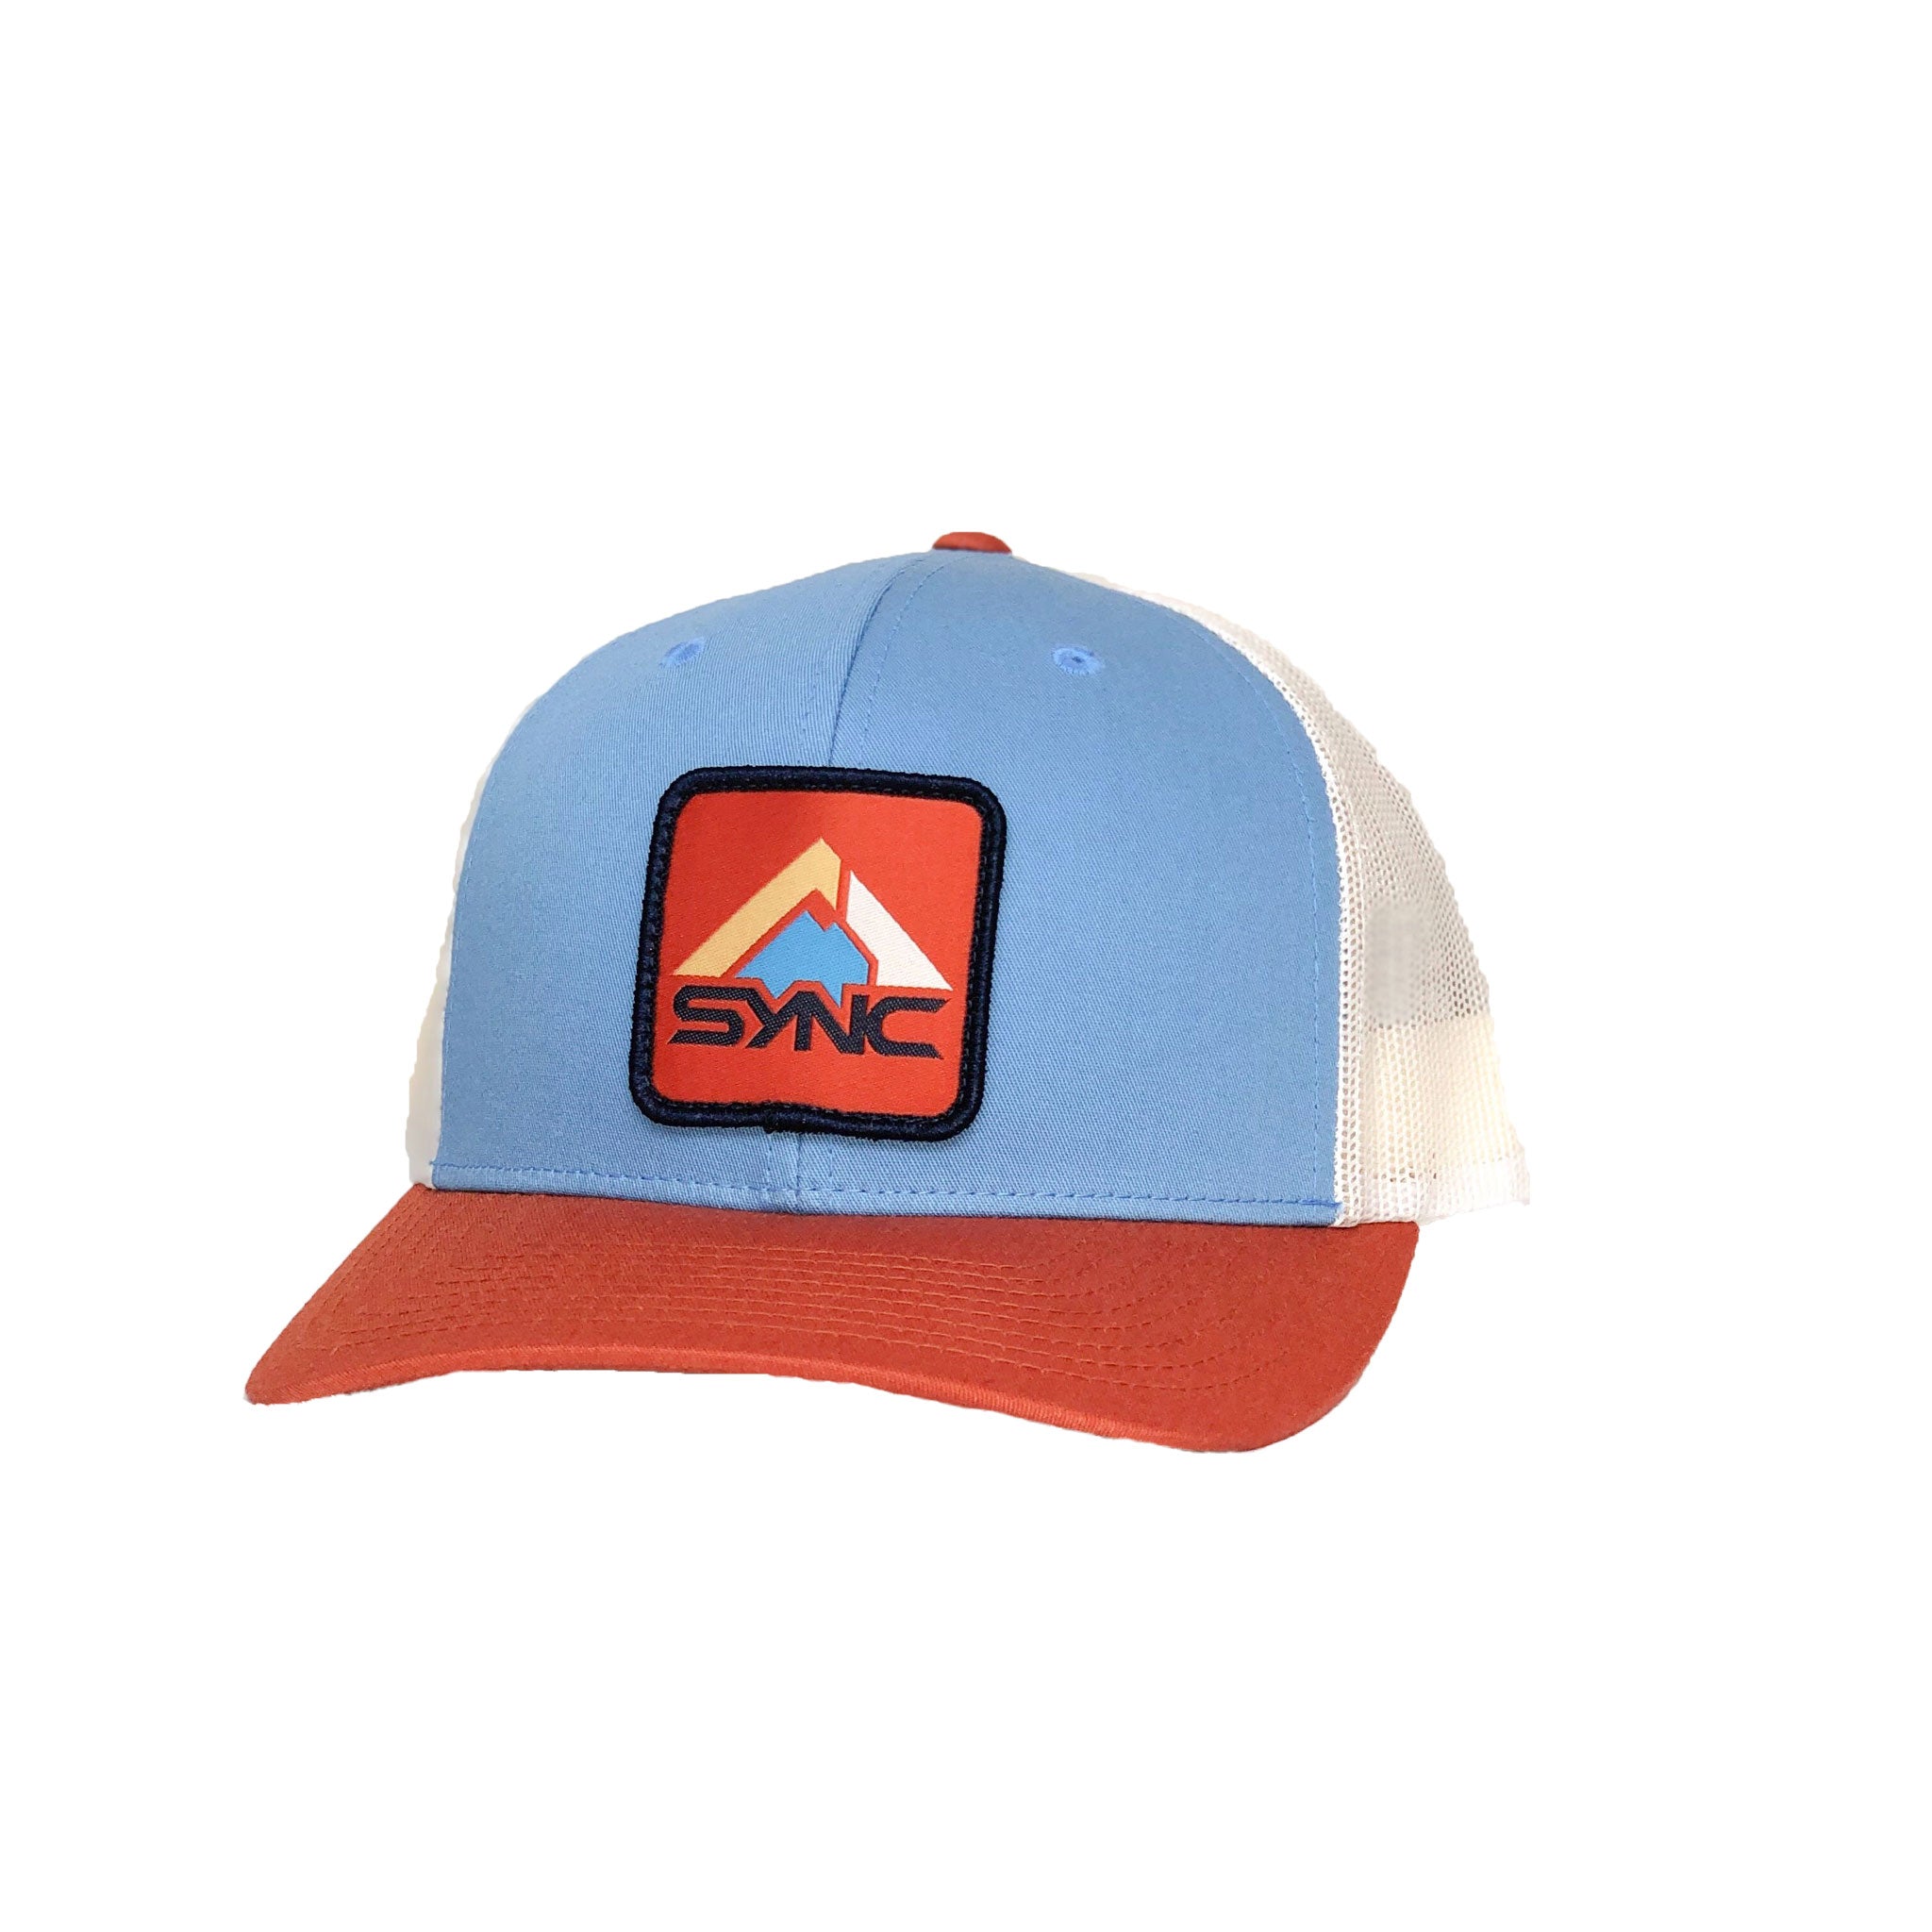 sync-performance-trucker-hat-columbia-blue